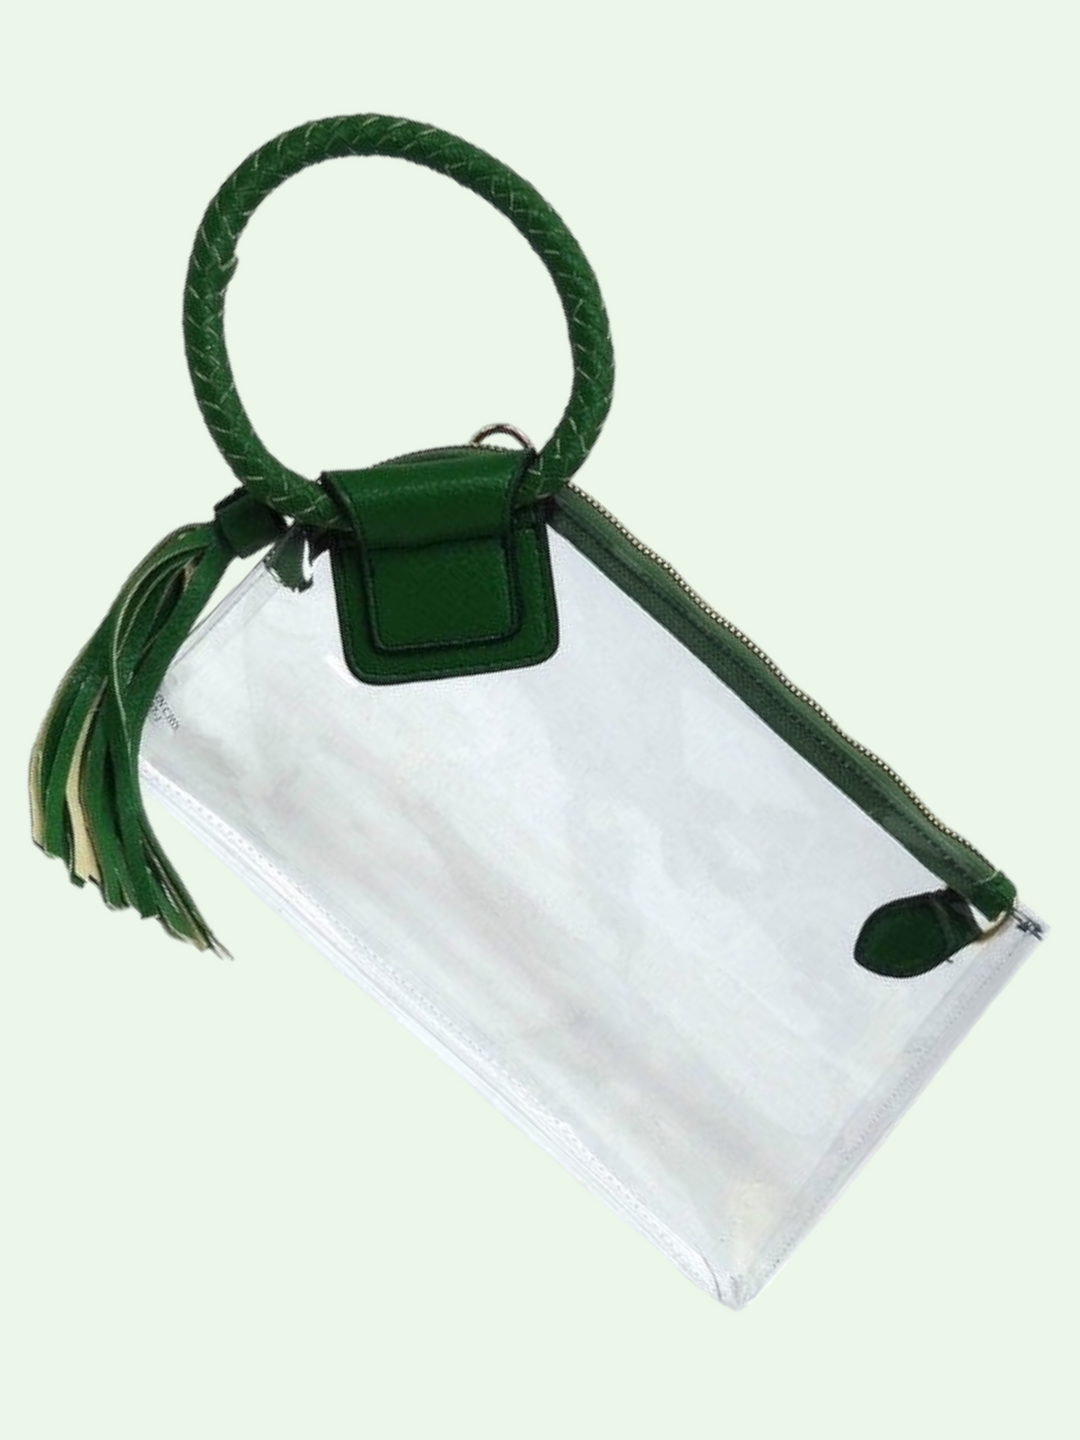 studio shot of the clear cuff handle bag